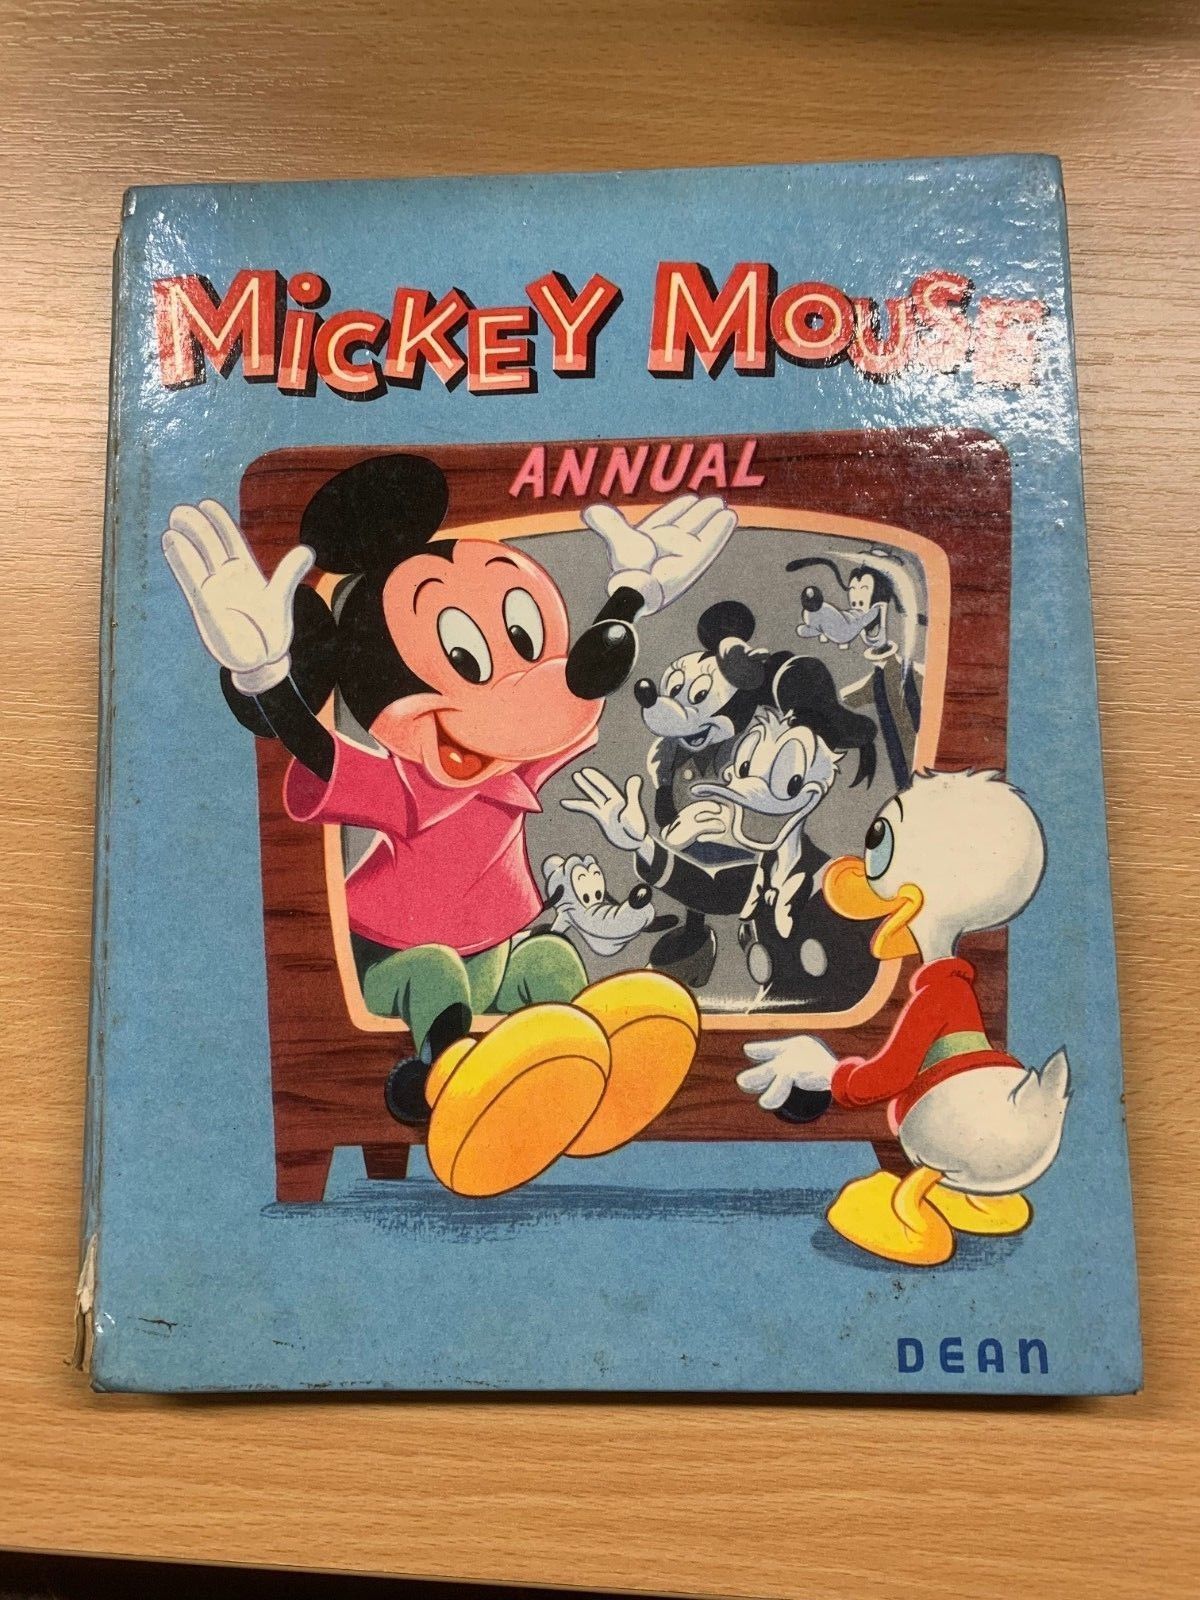 1956 WALT DISNEY "MICKEY MOUSE ANNUAL" CHILDRENS LARGE ILLUSTRATED HARDBACK BOOK - $10.75